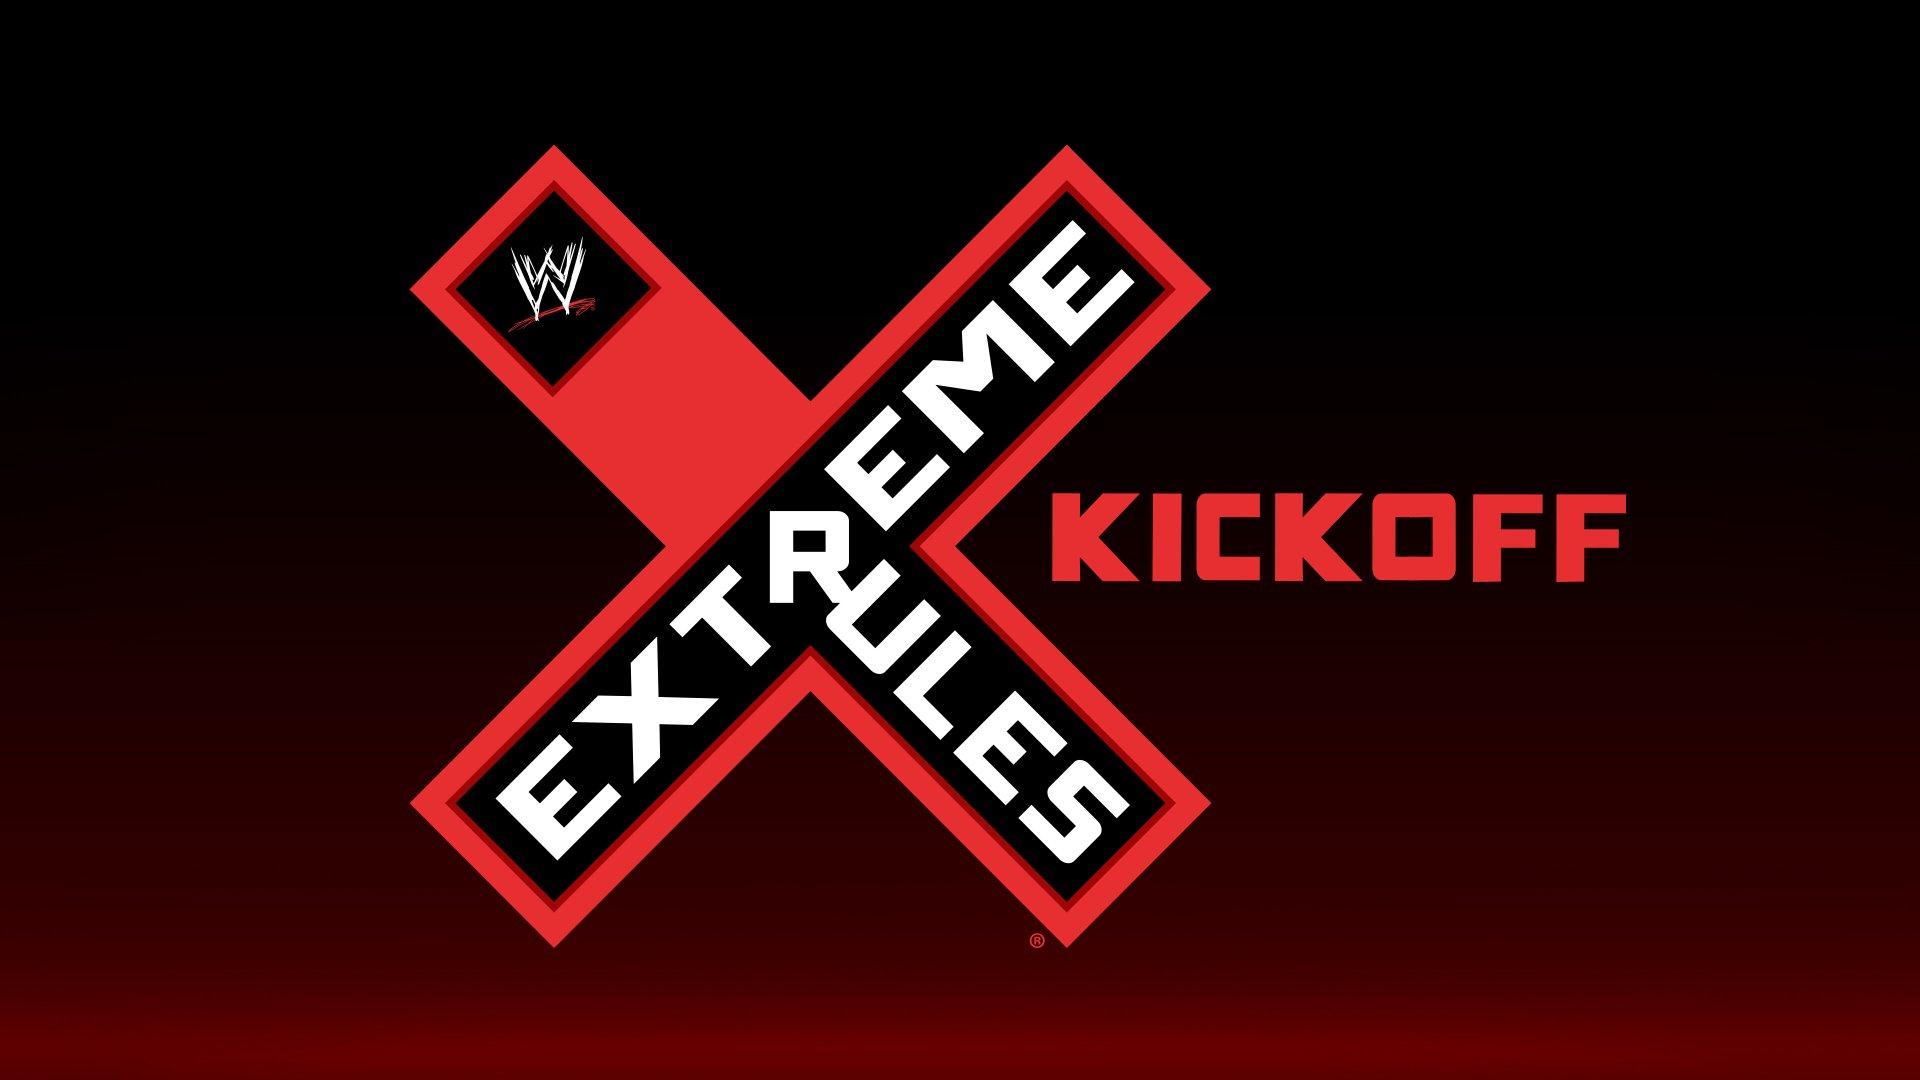 WWE Extreme Rules 2014 Kickoff